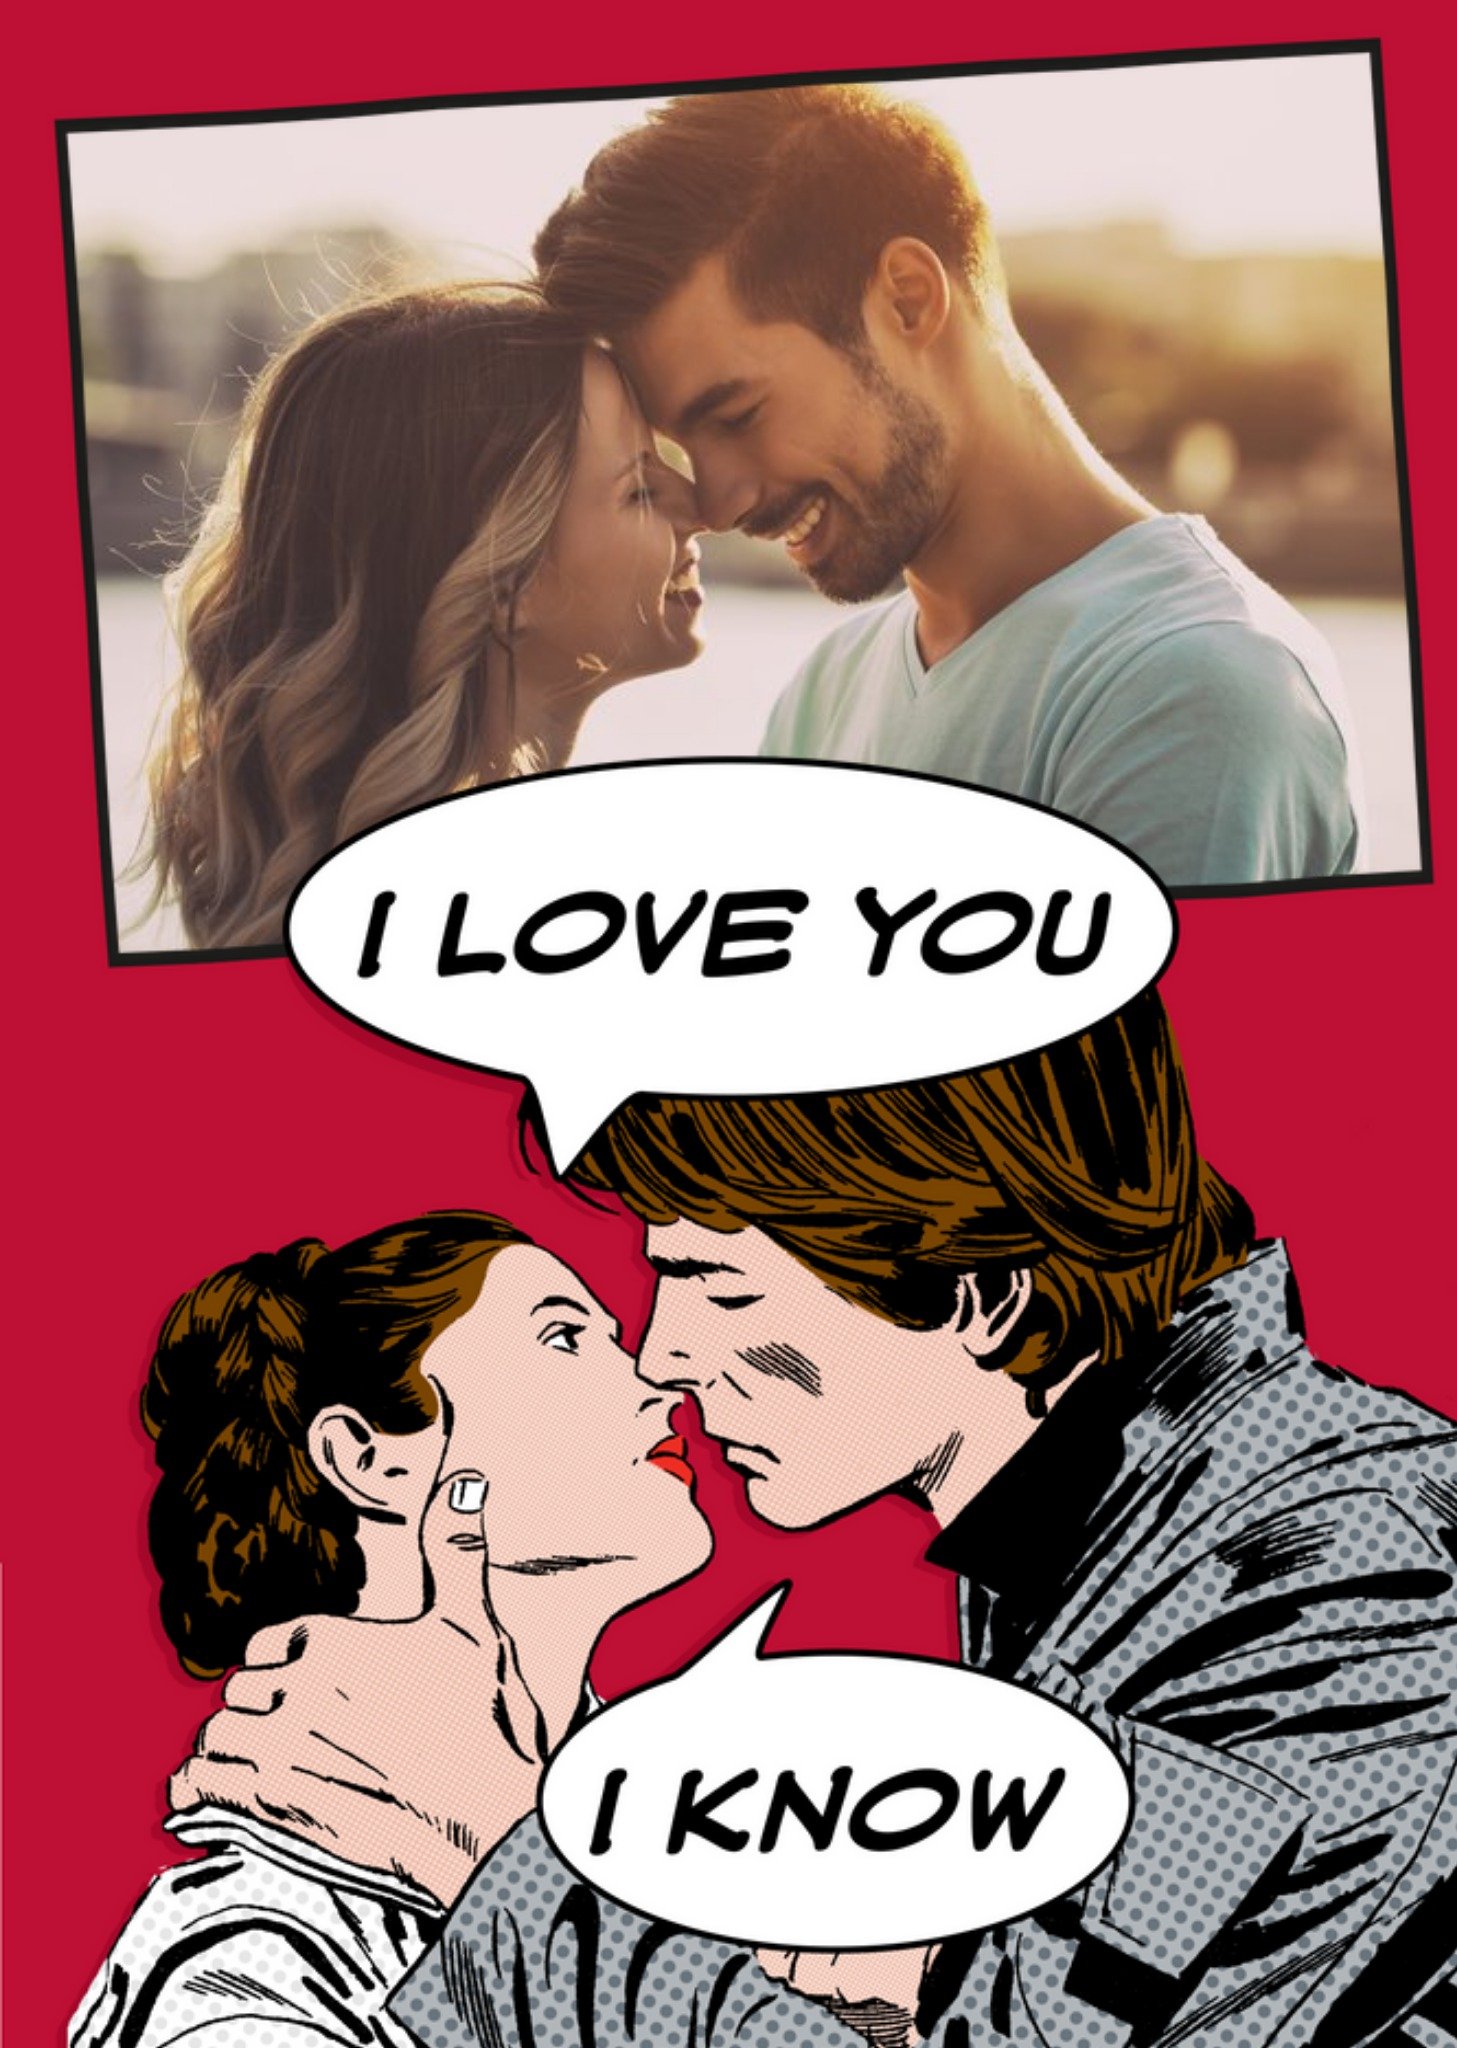 Disney Star Wars Princess Leia And Han Solo I Love You Valentine's Card, Large